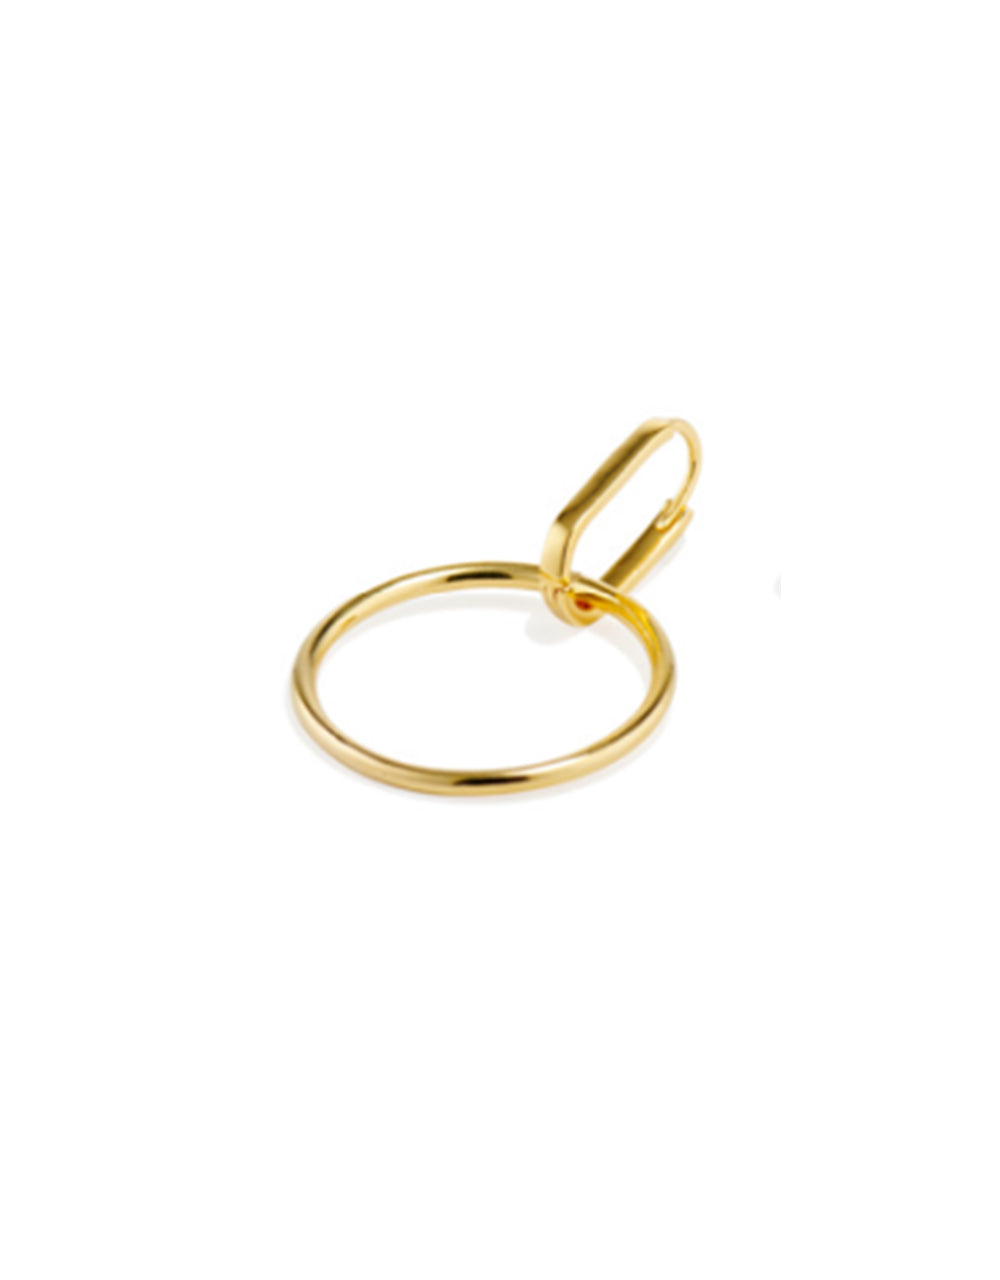 Infinity Earrings Yellow 14K Gold